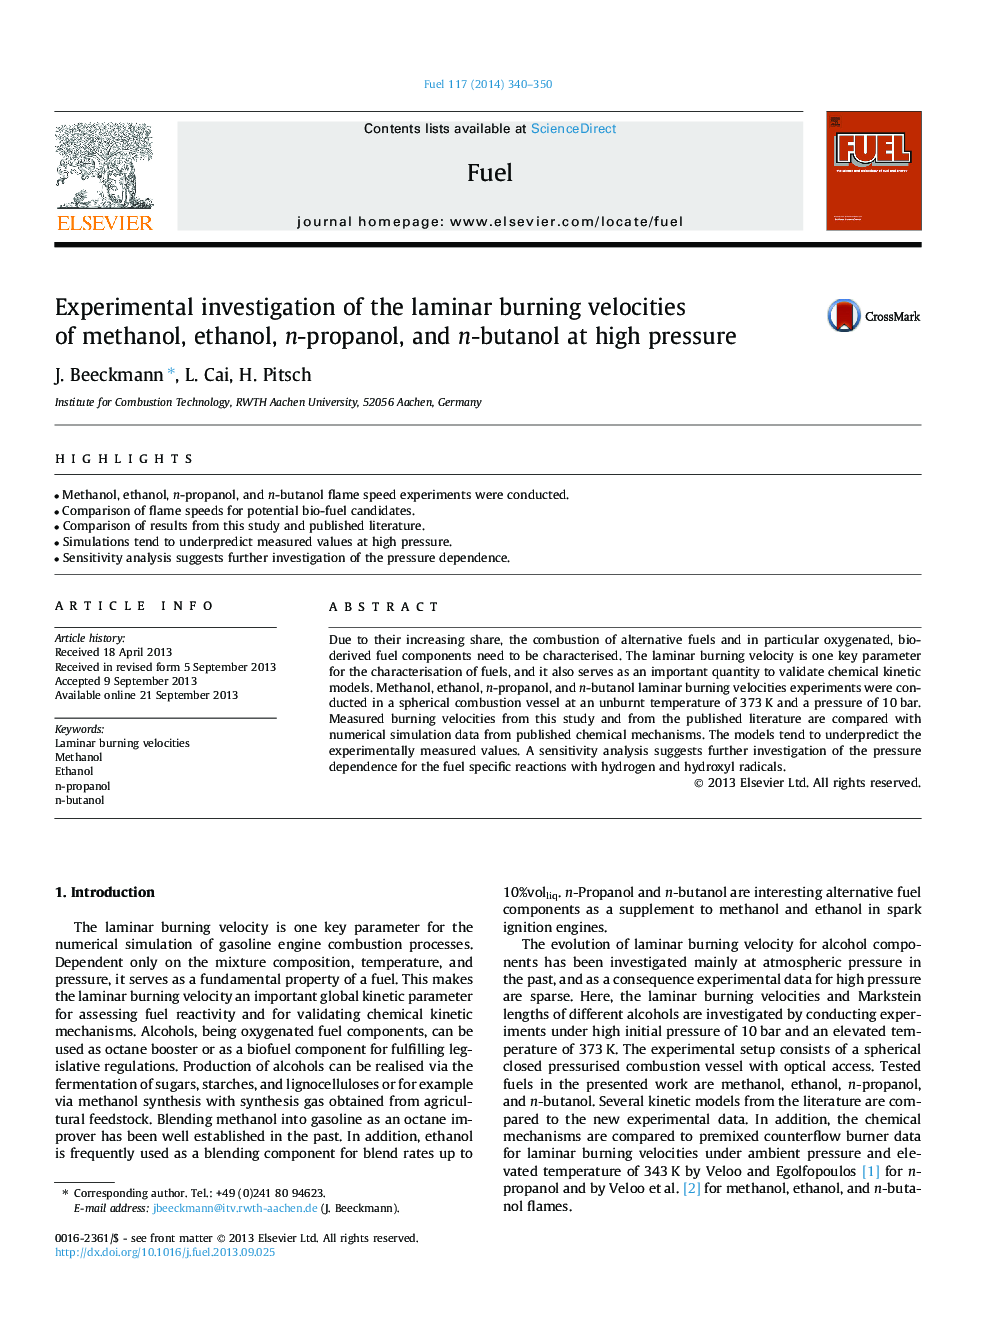 Experimental investigation of the laminar burning velocities of methanol, ethanol, n-propanol, and n-butanol at high pressure